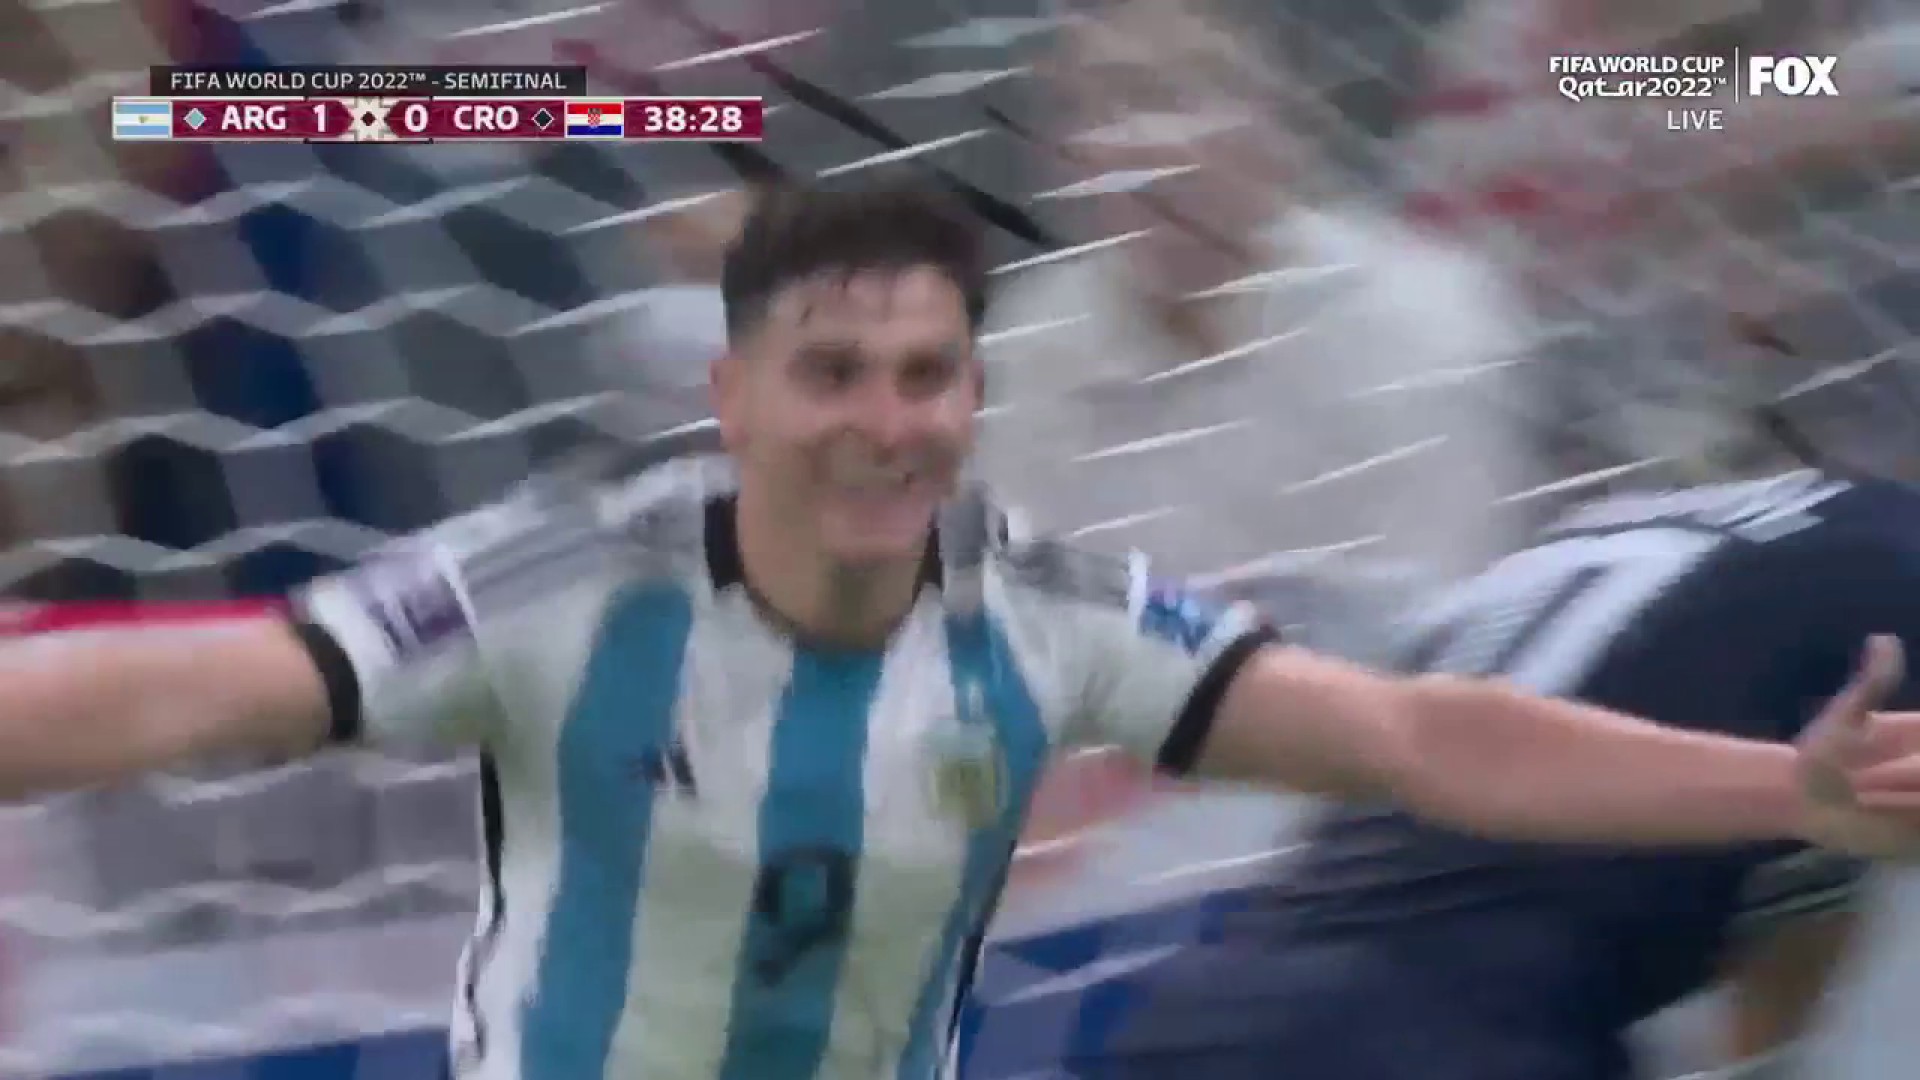 JULIAN ALVAREZ WHAT A GOAL 😱

2-0 ARGENTINA 🇦🇷”